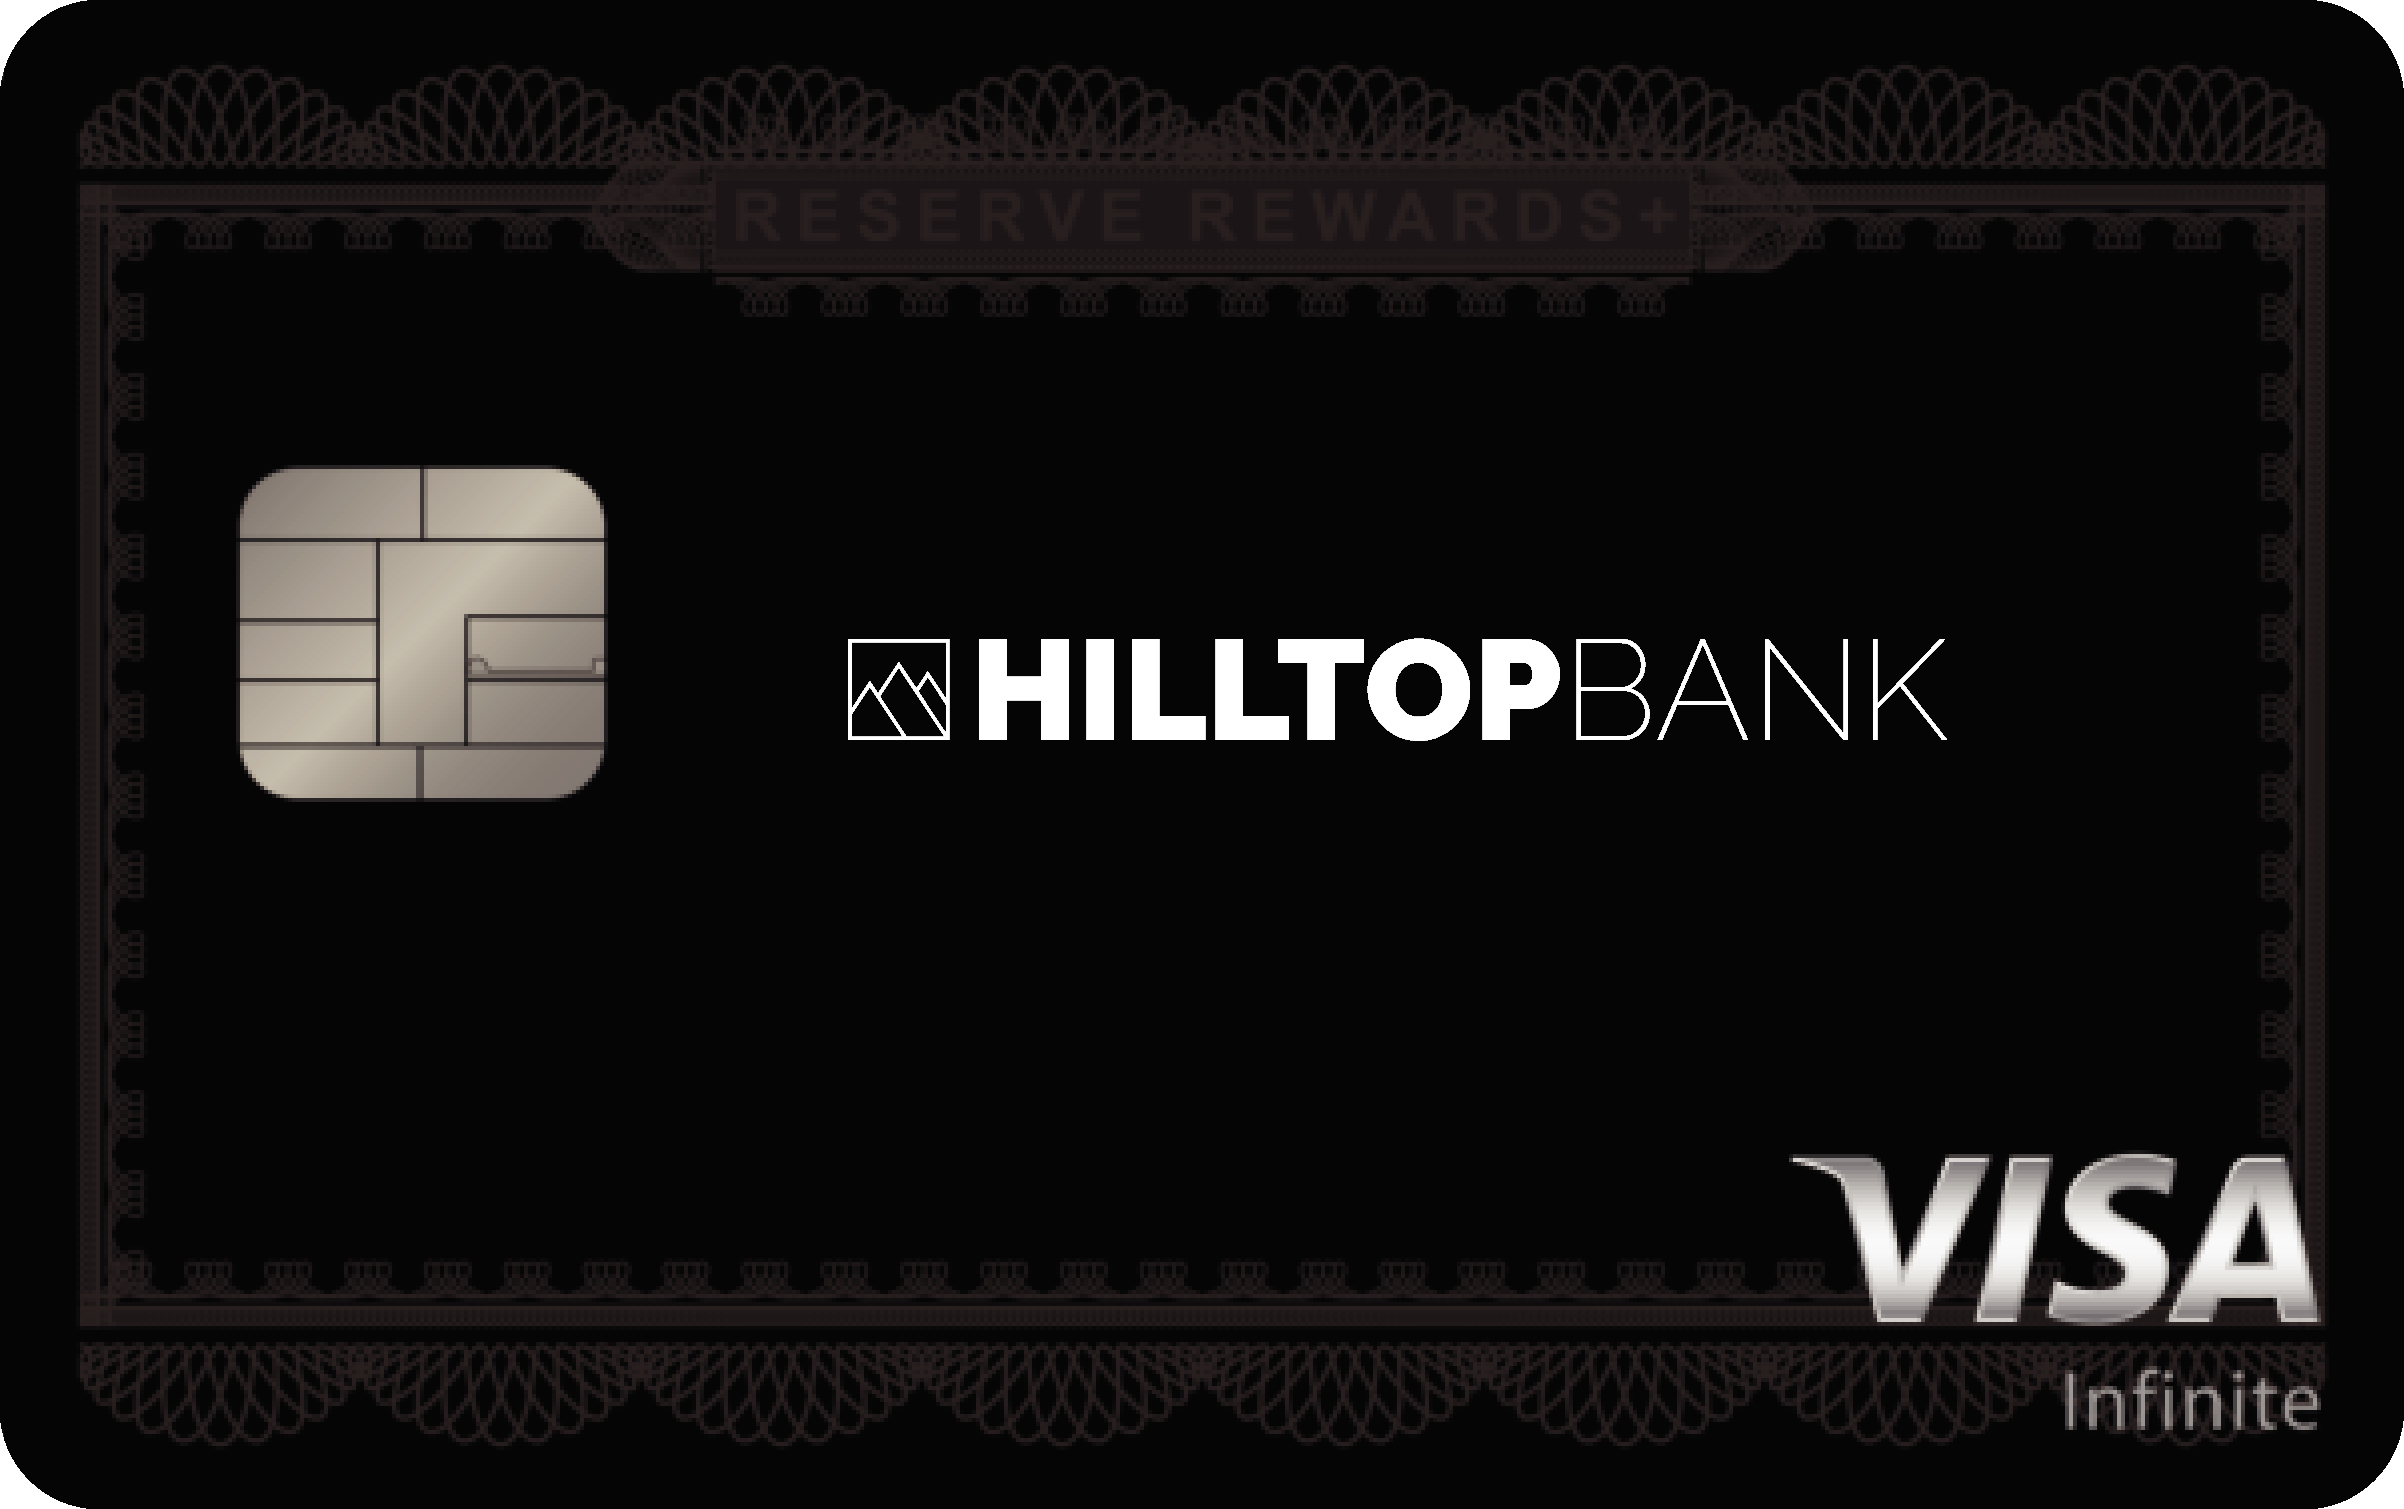 Hilltop Bank